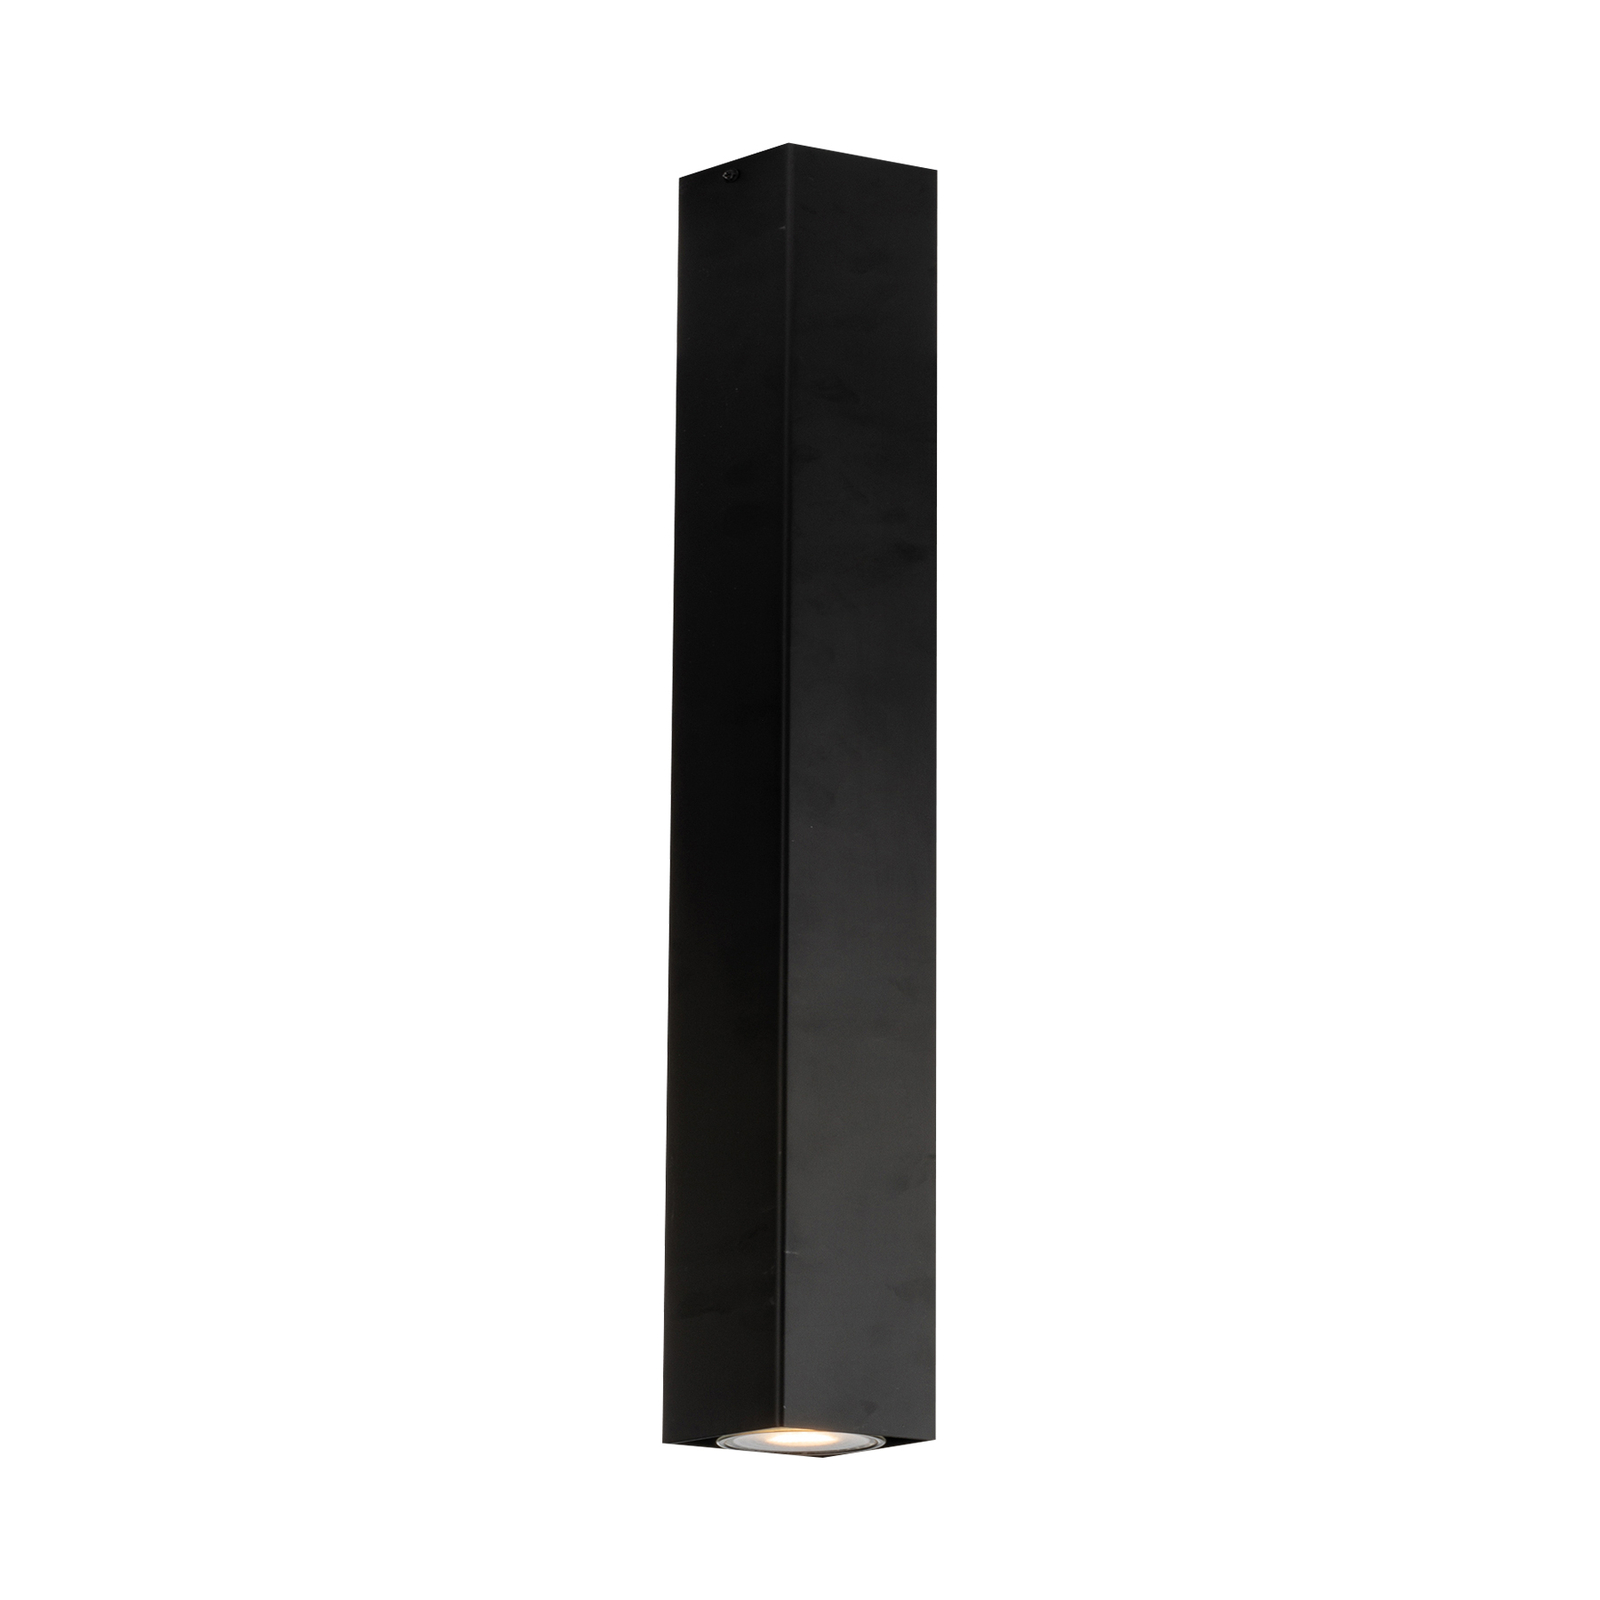 Downlight Fluke em formato angular altura 40 cm preto